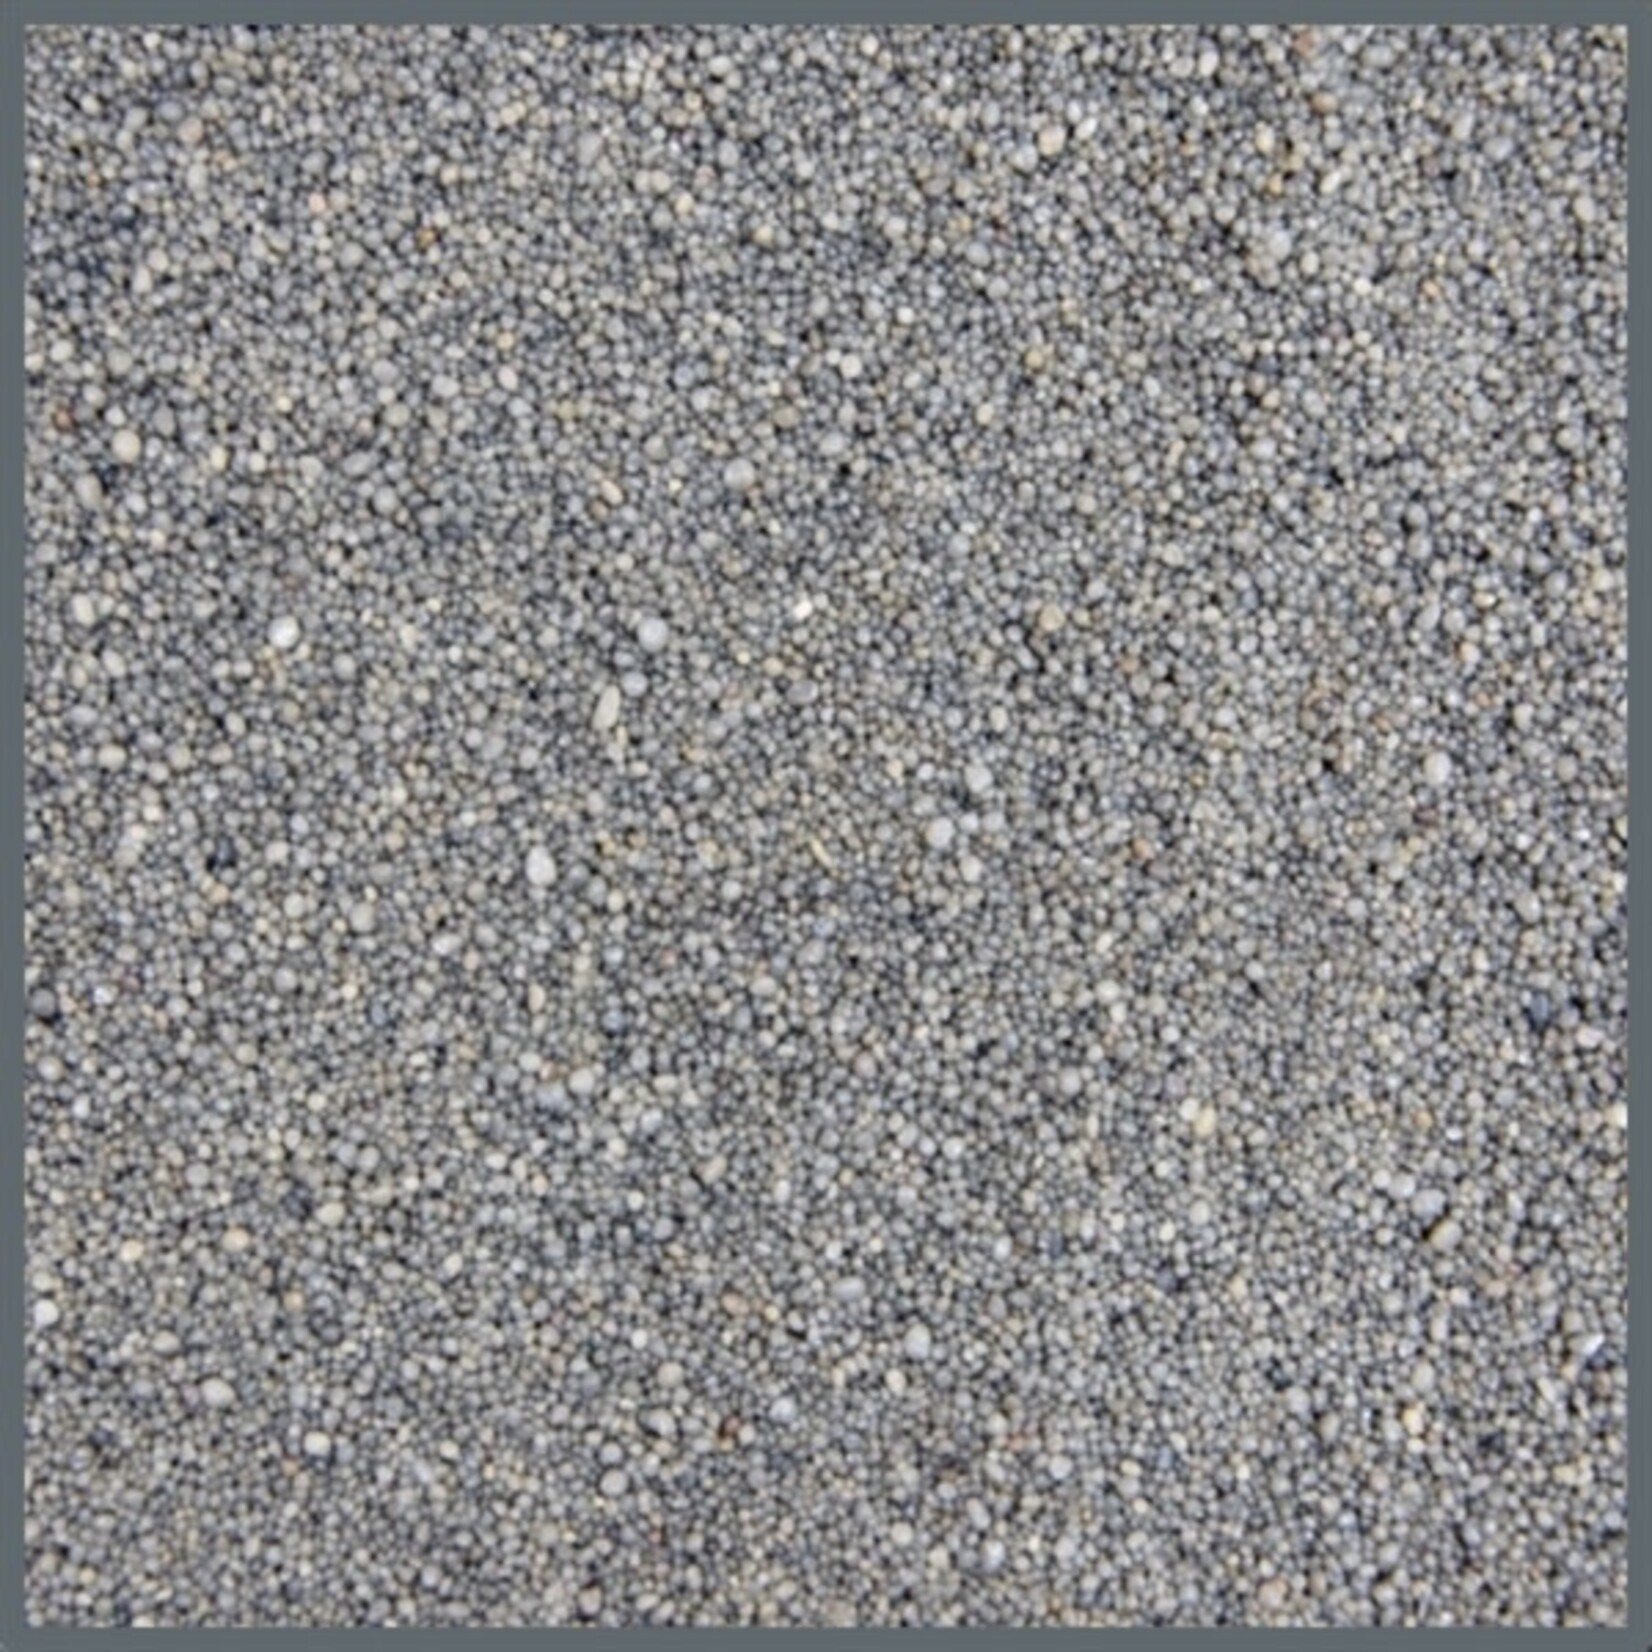 Dupla Ground colour mountain grey 0.5-1.4 mm 10 kg